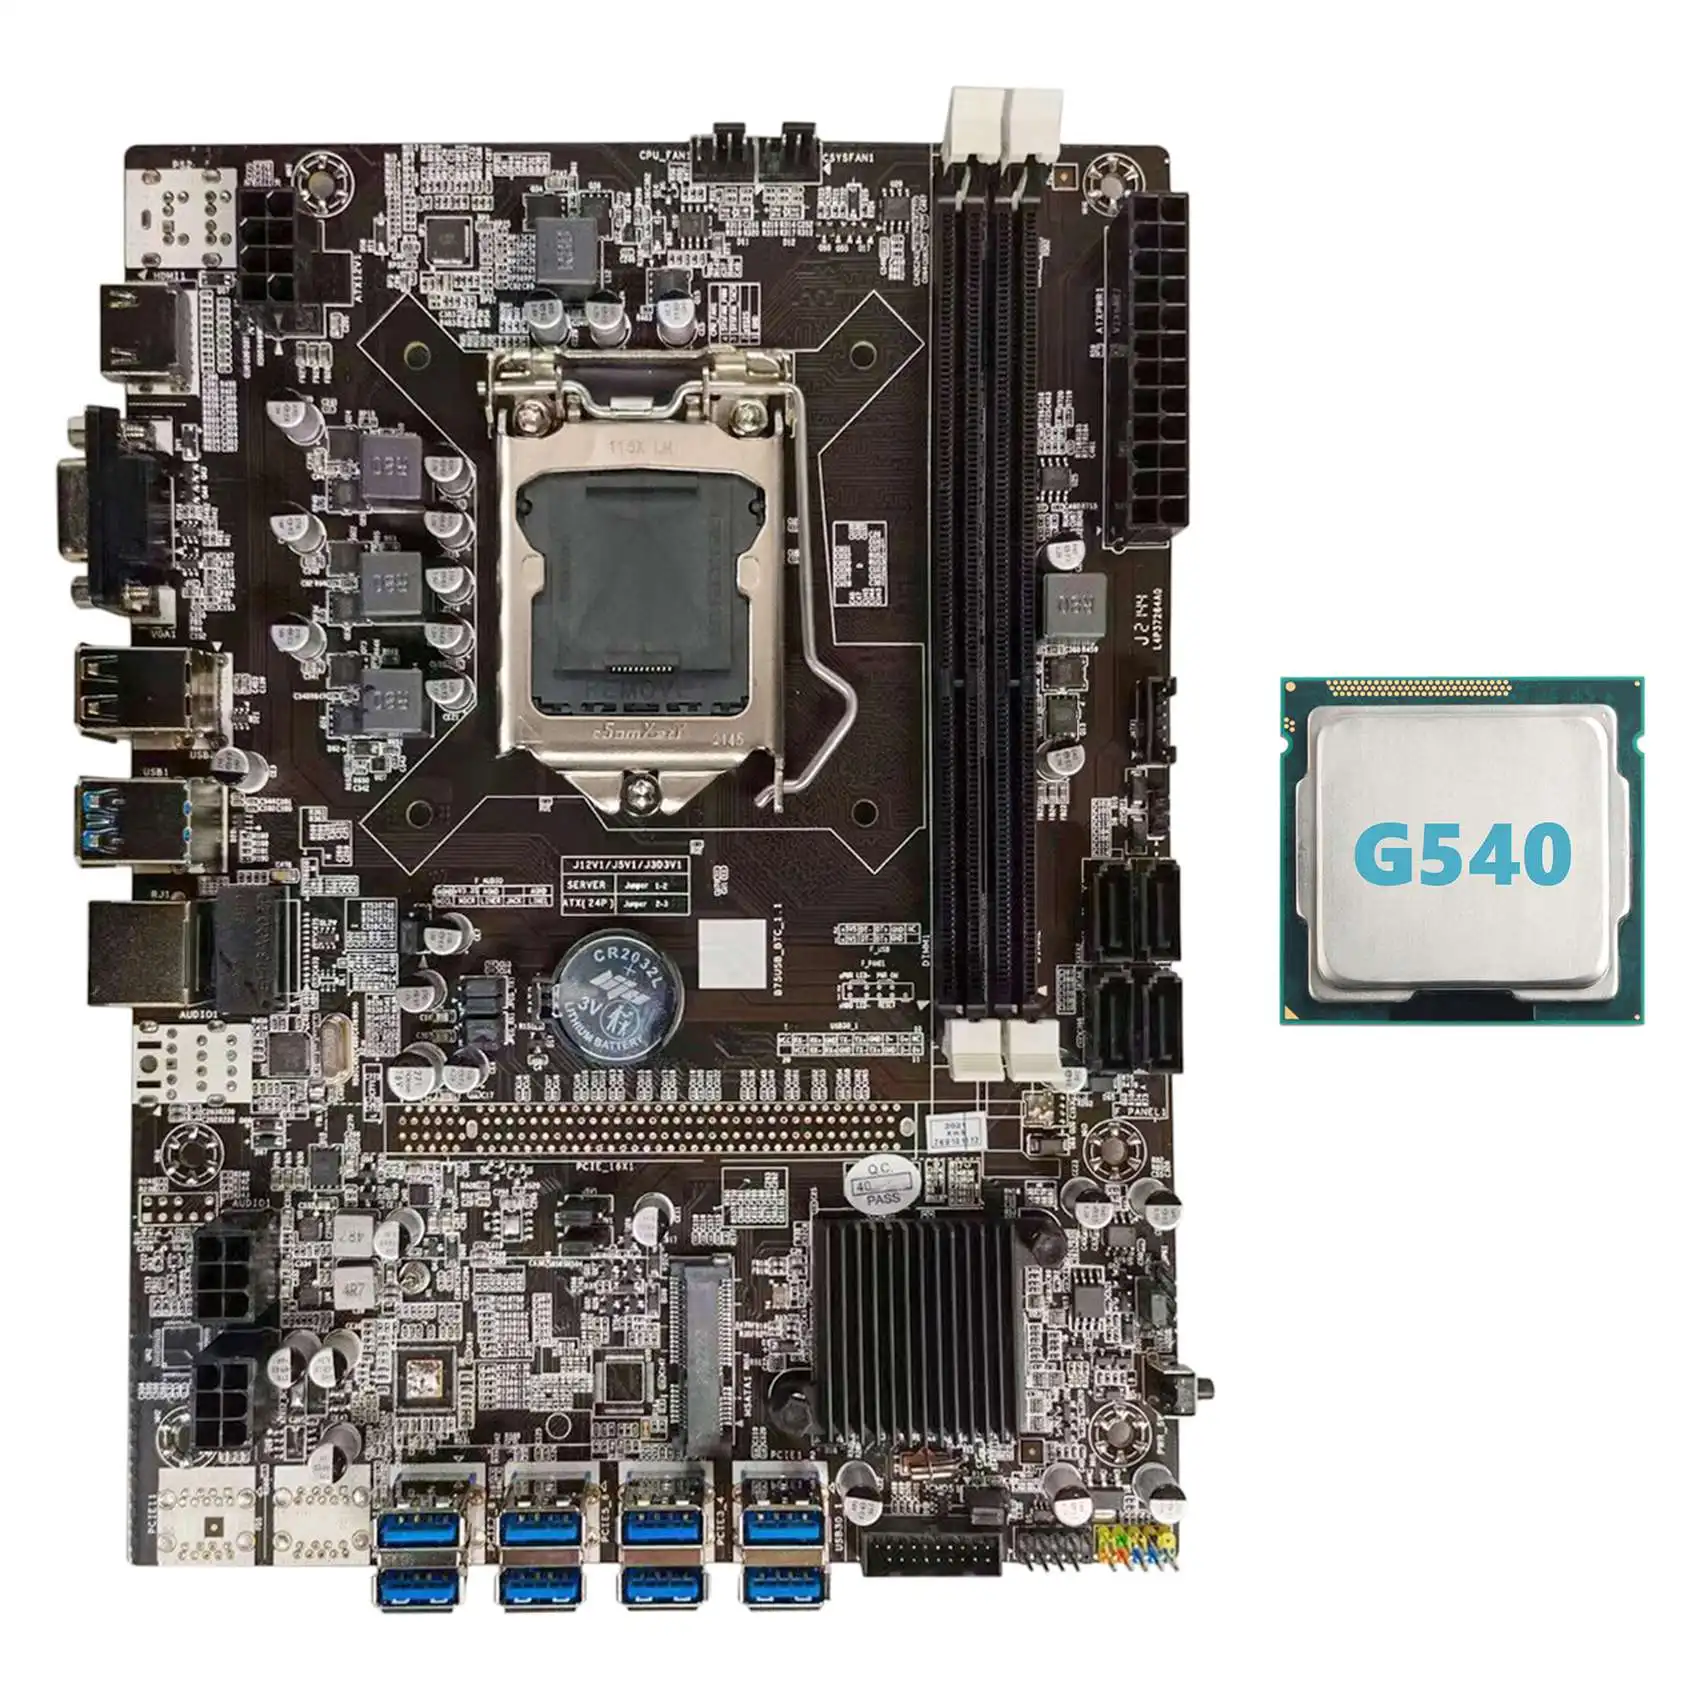 

B75 BTC Mining Motherboard+G540 CPU LGA1155 8XPCIE USB Adapter Support 2XDDR3 MSATA B75 USB BTC Miner Motherboard